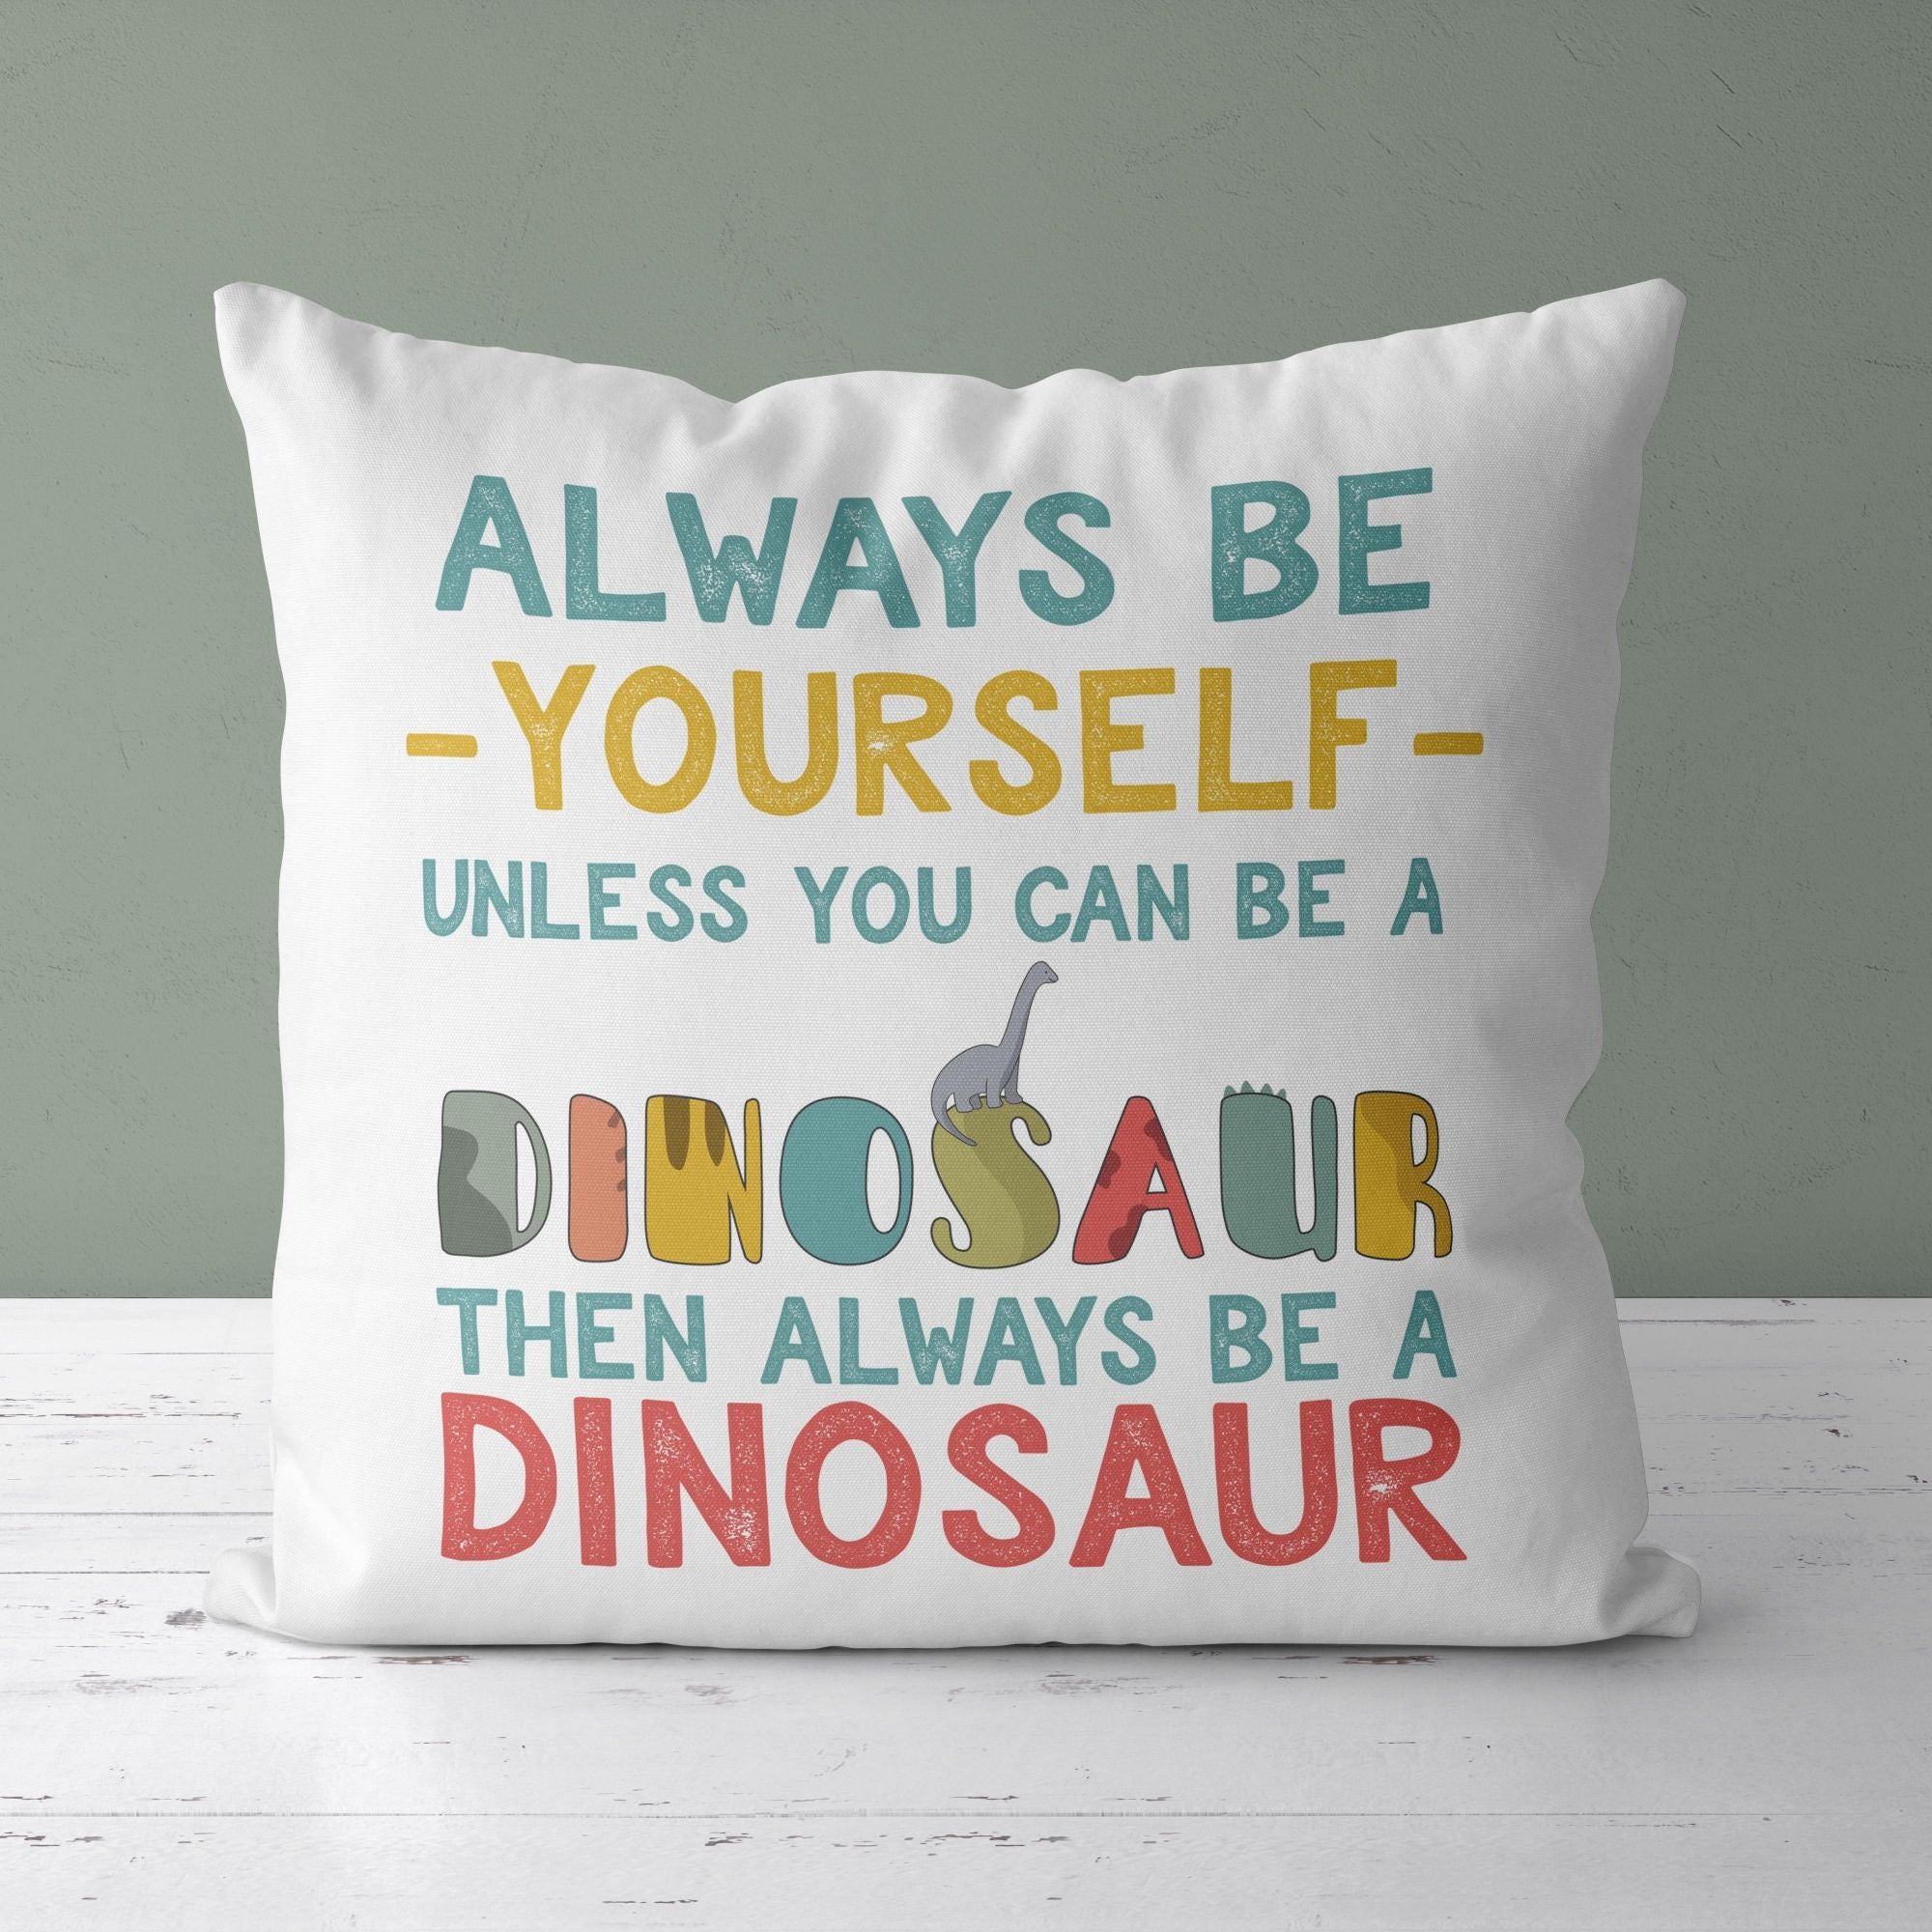 Dinosaur Throw Pillow For Nurseries & Kid's Rooms - Be a Dinosaur